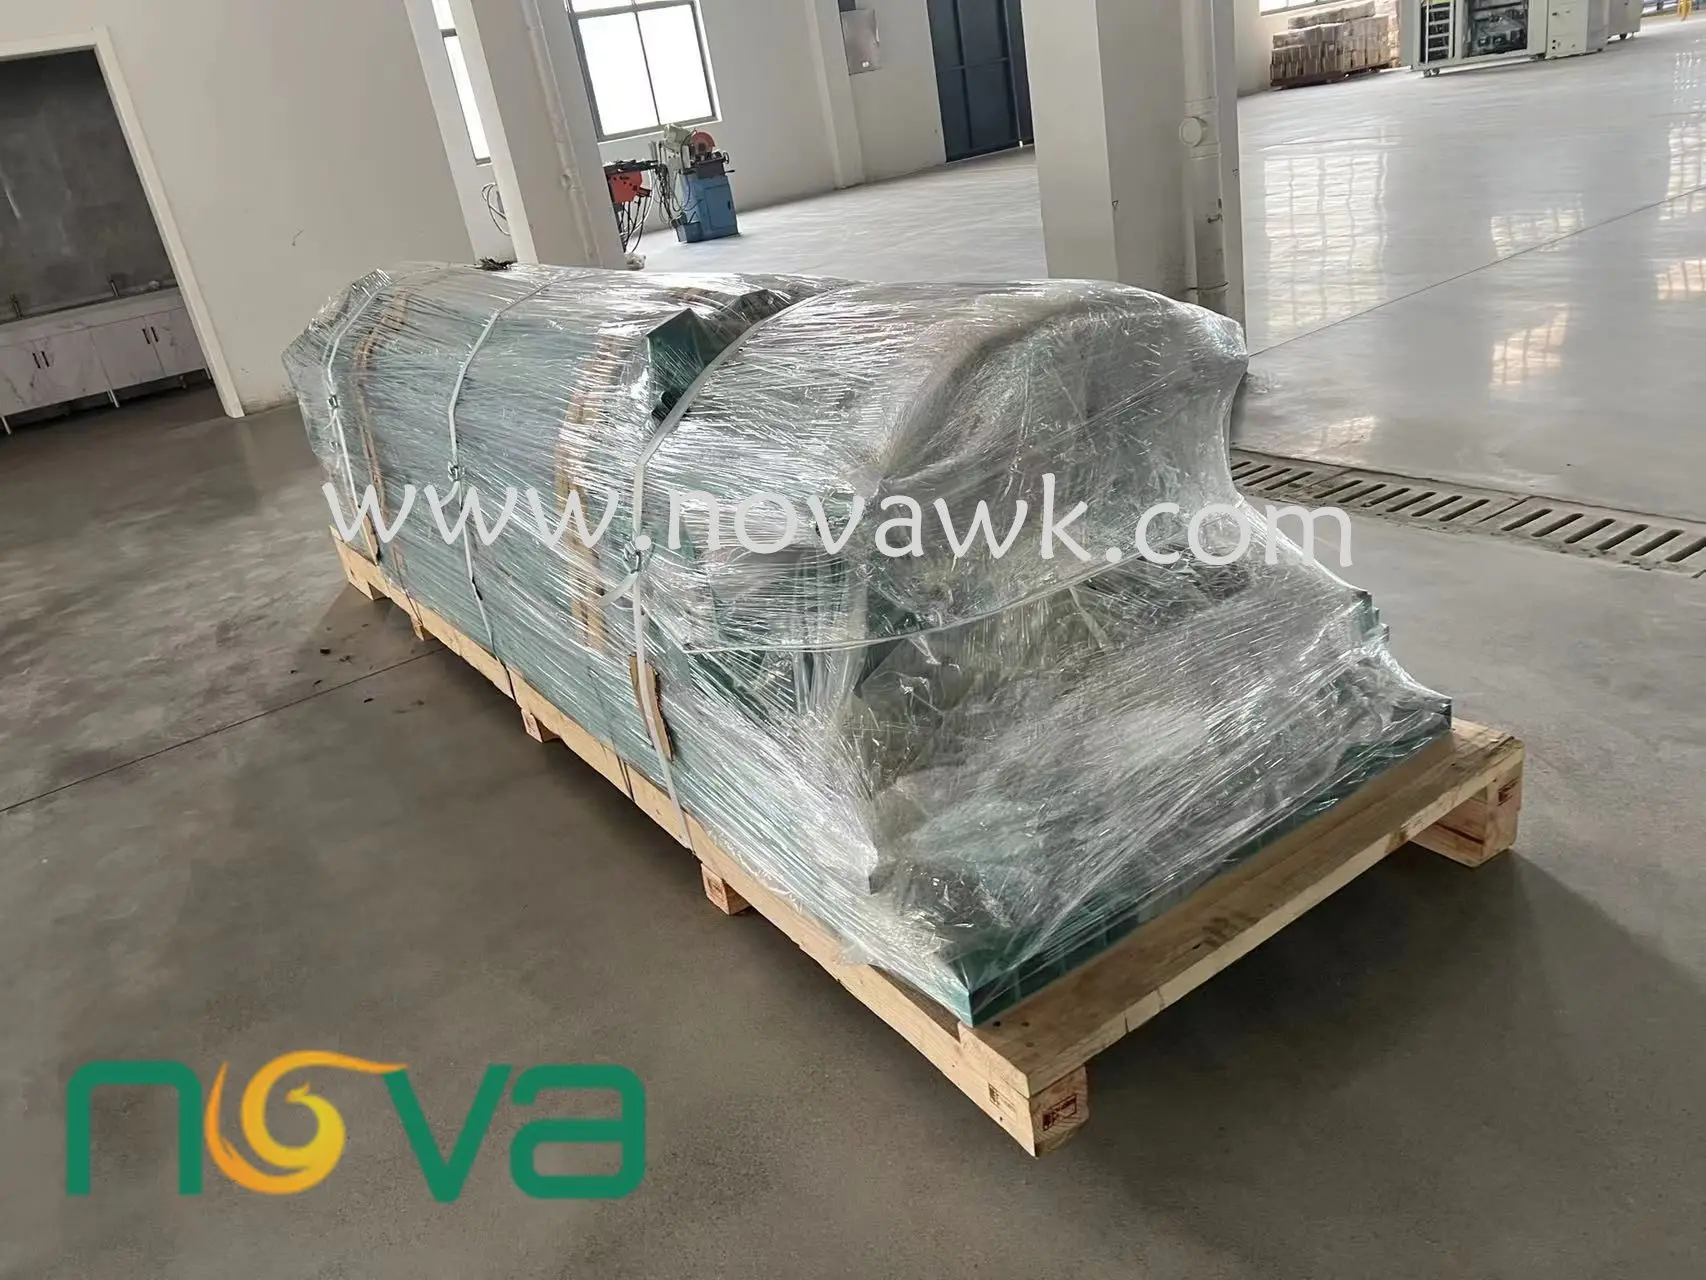 Changzhou Nova High Speed Practical Splitting Spandex Warping Machine For Elastic Yarn Textile